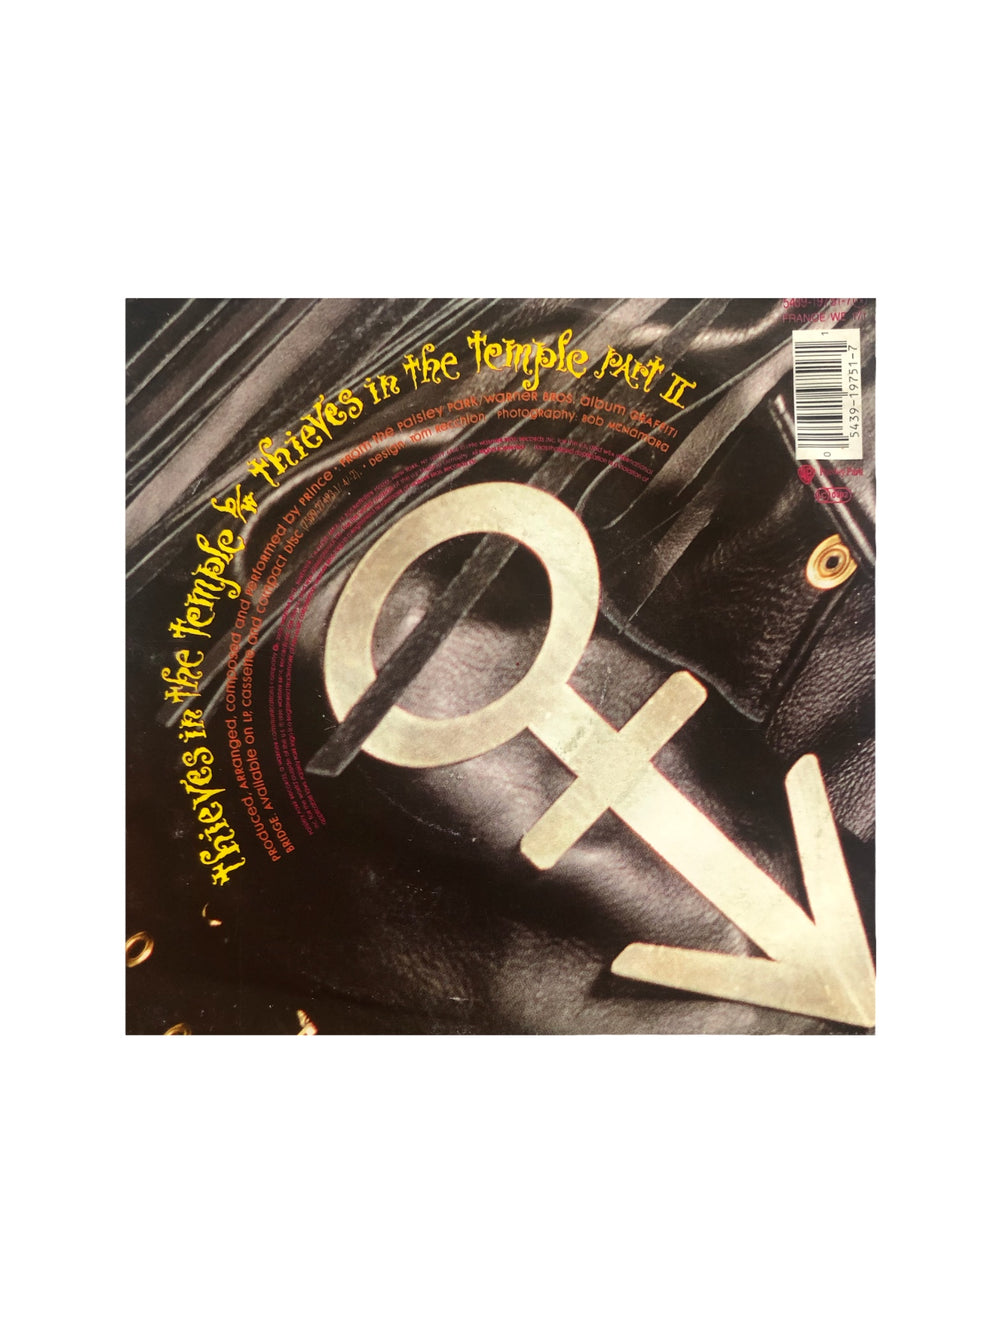 Prince – Thieves In The Temple Vinyl 7" Single EU Gema  Preloved 1990